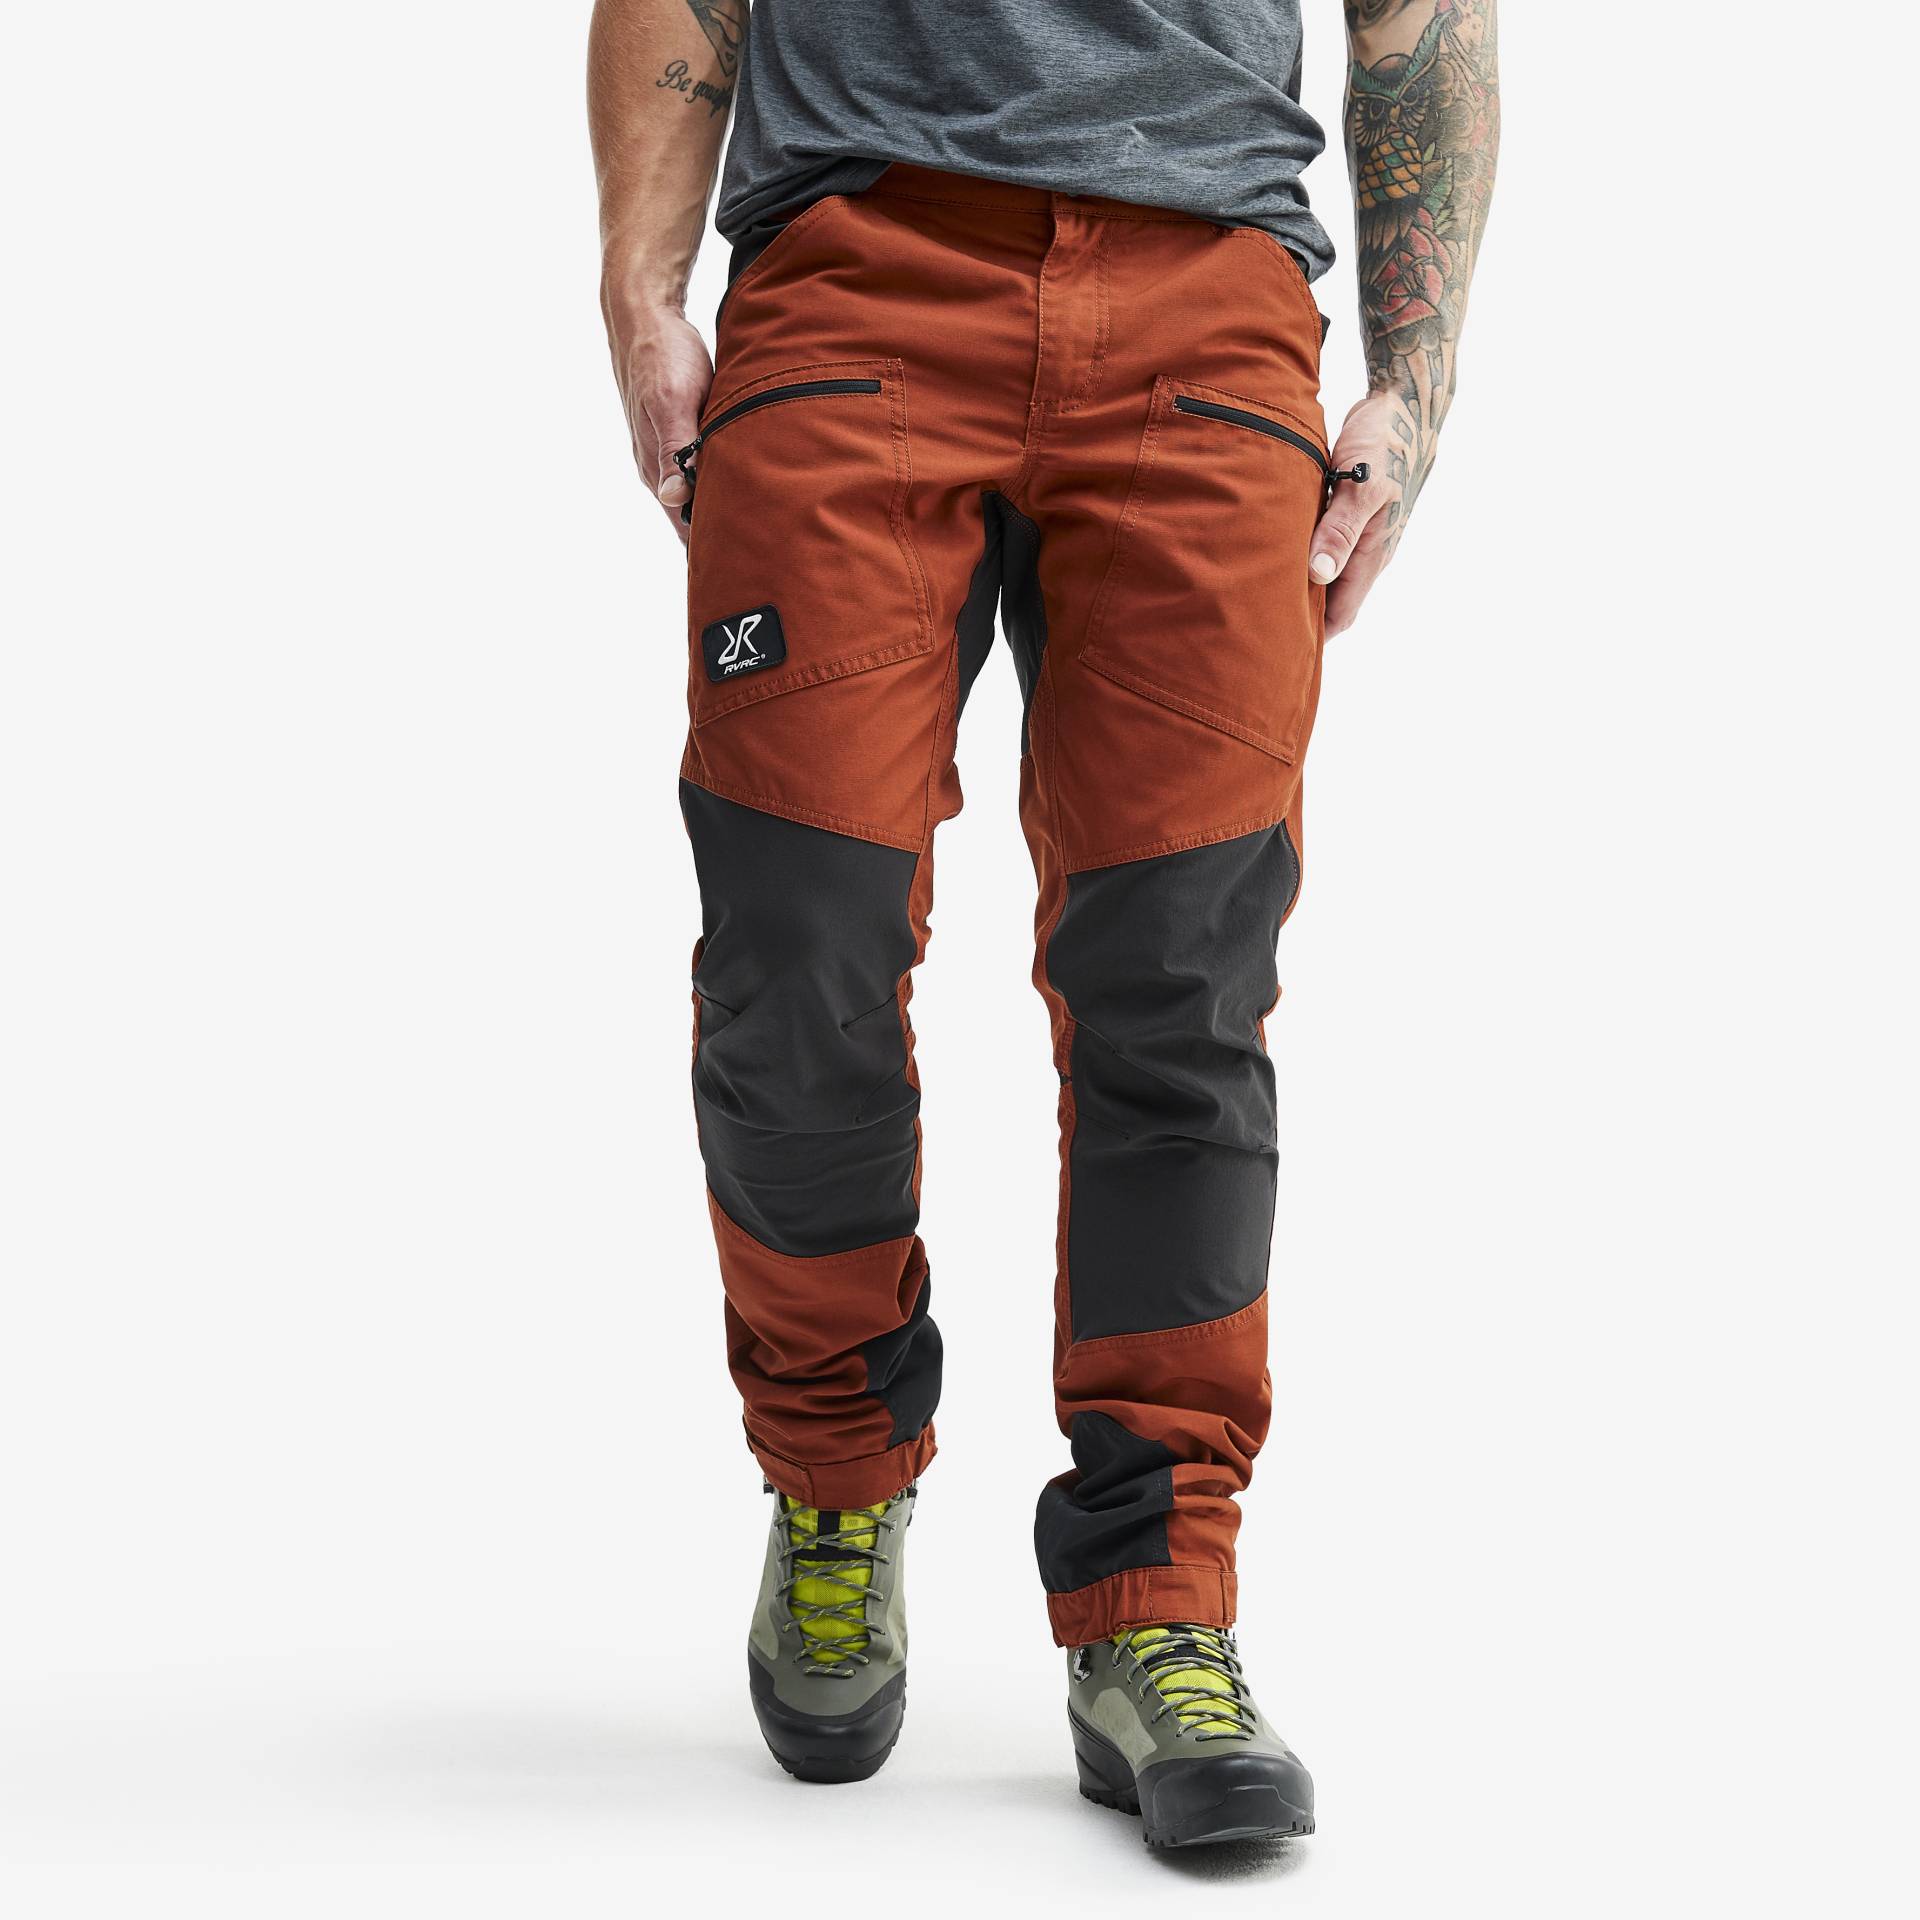 Nordwand Pro Pants Herren Rusty Orange, Größe:S - Outdoorhose, Wanderhose & Trekkinghose von RevolutionRace